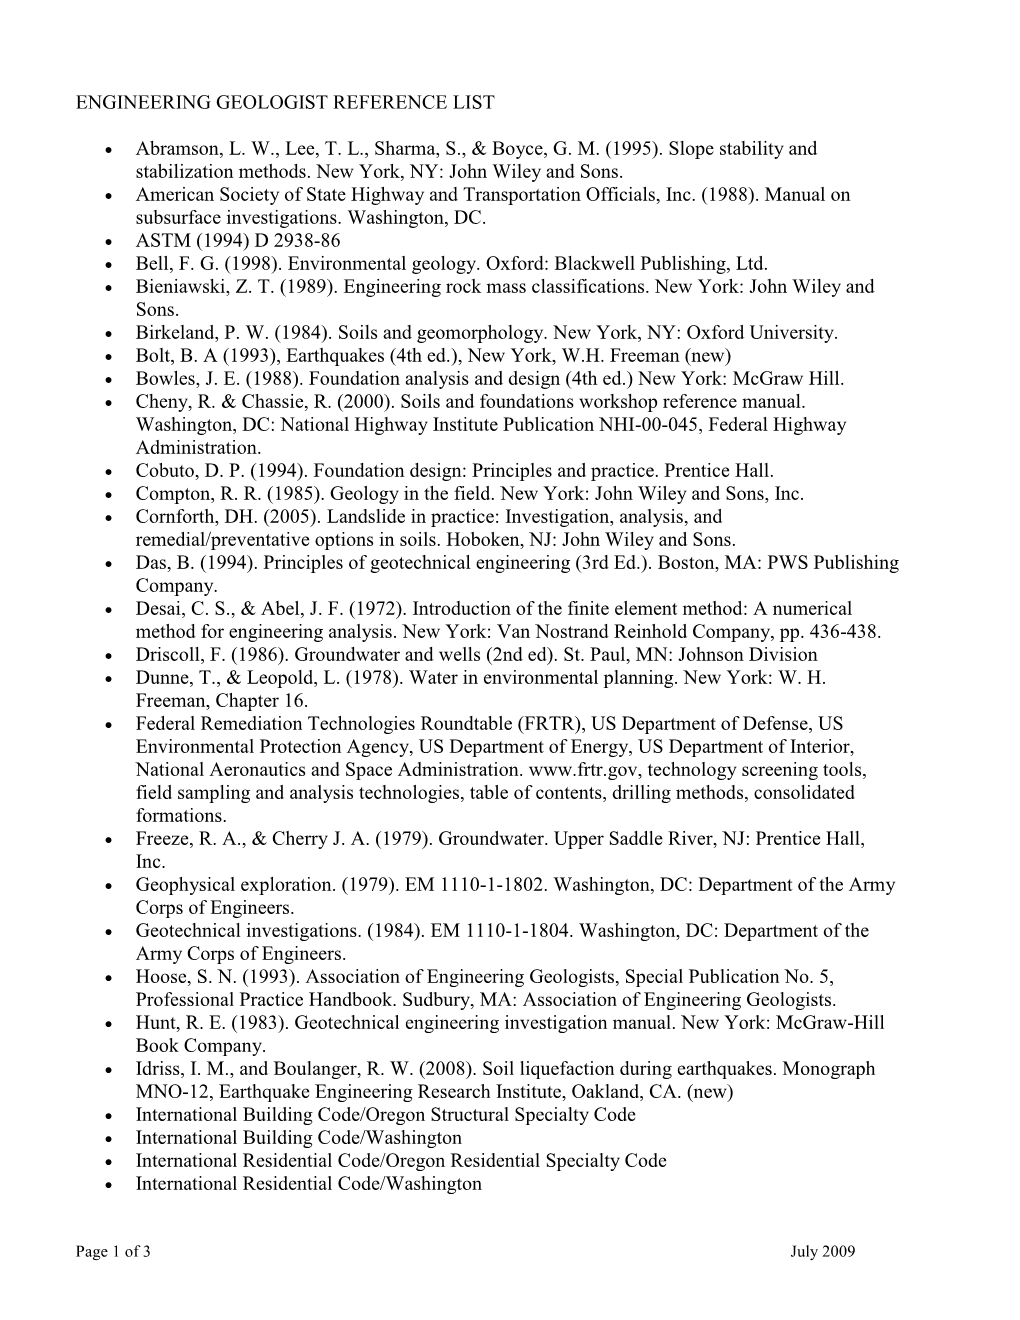 Engineering Geology Exam Reference List 2009